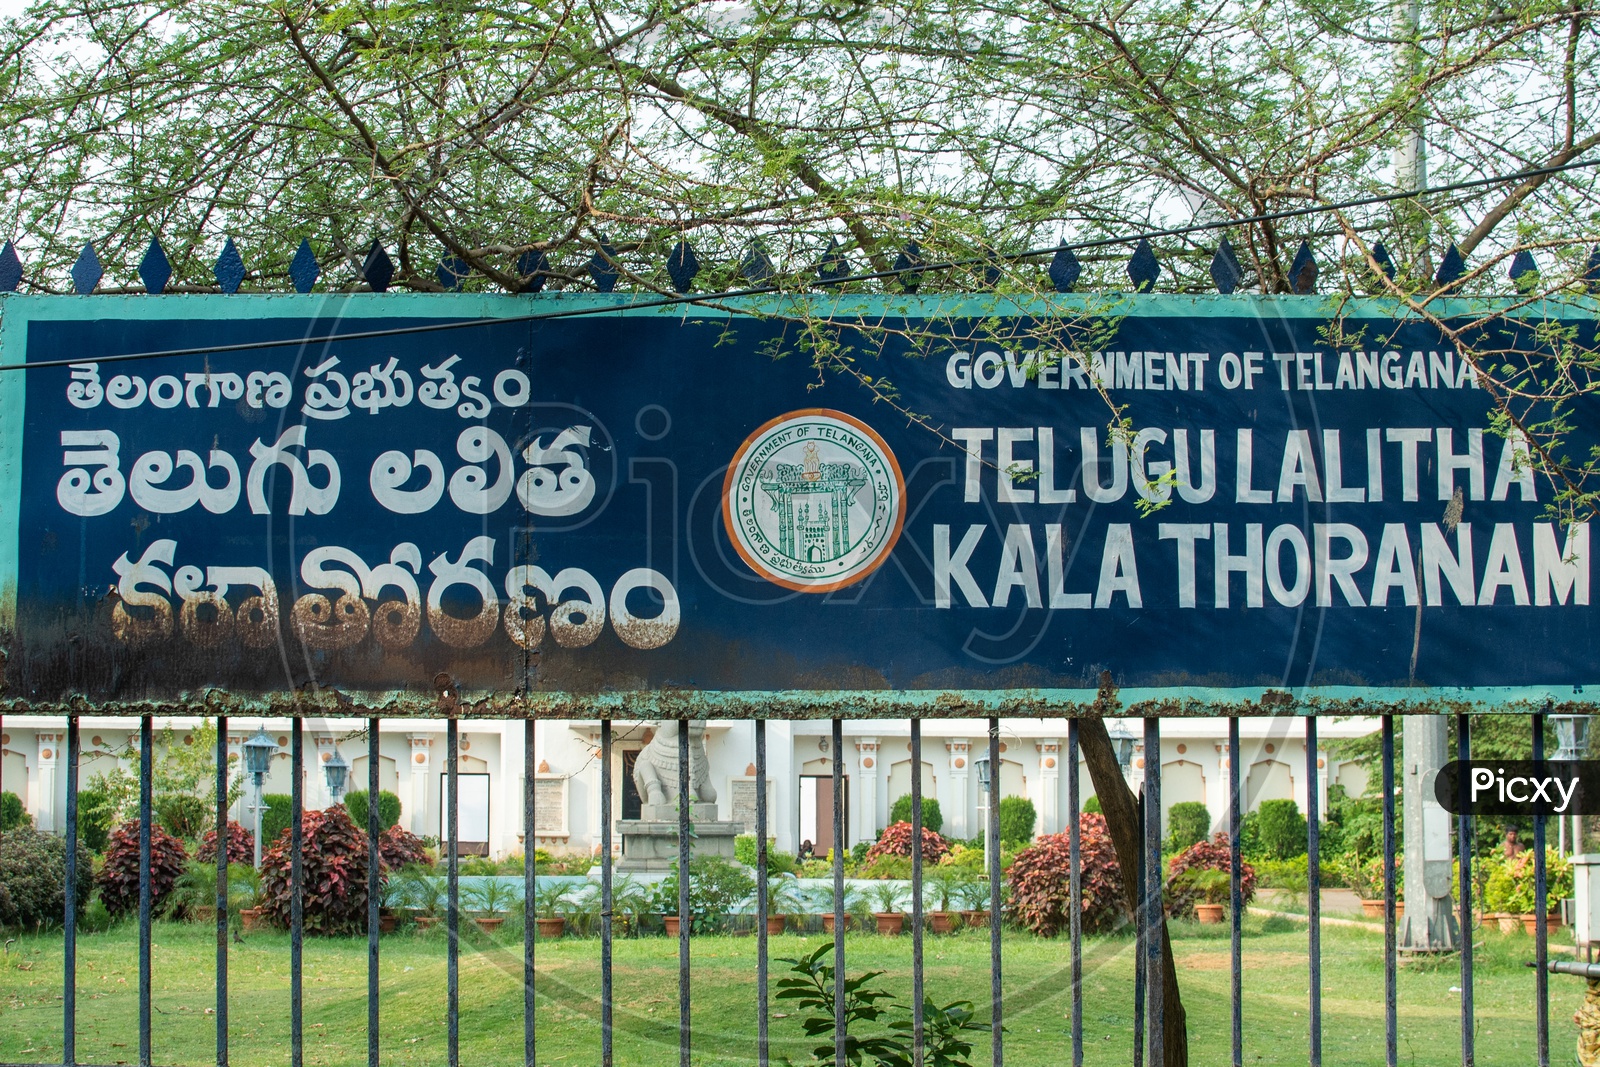 Telugu Lalitha Kala Thornam